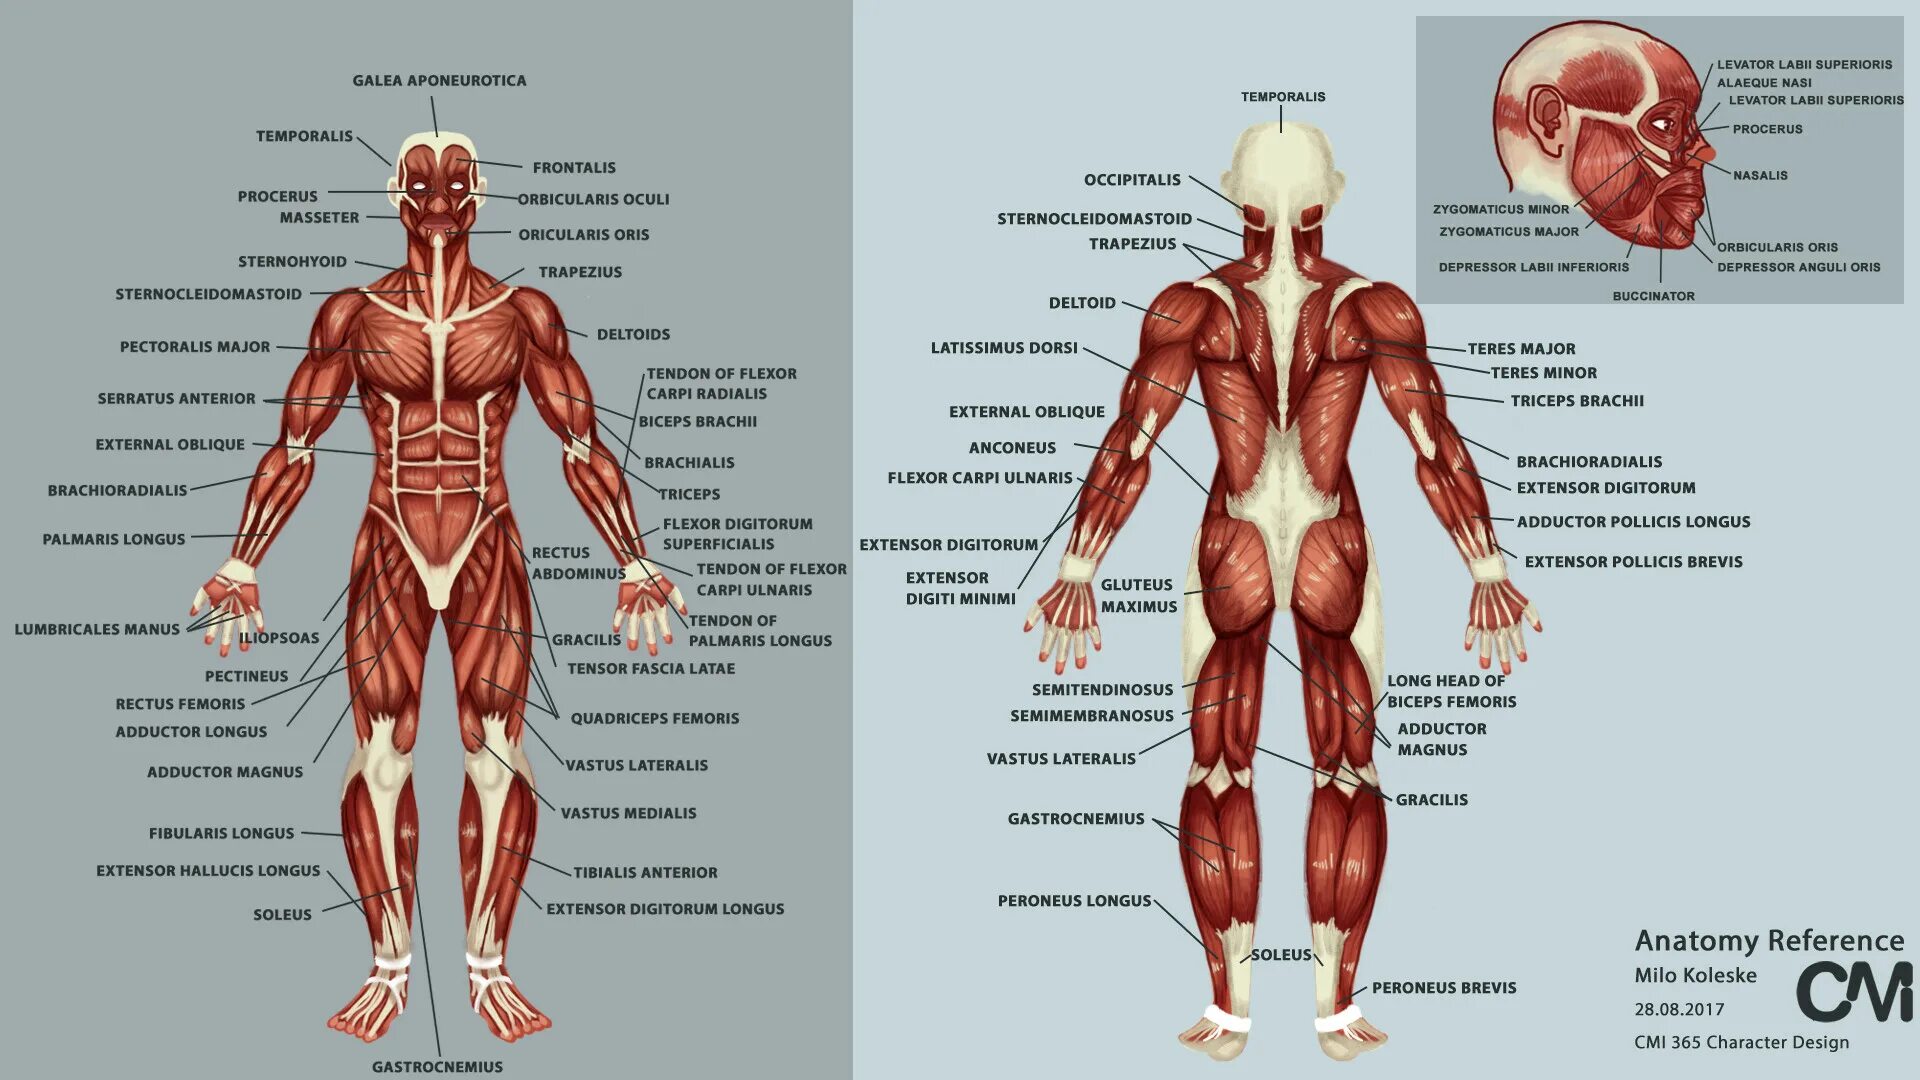 Атлас анатомия человека мышечная система. Мышечная система человека схема для массажа. Анатомия мышц человека для массажистов. Мышцы туловища человека анатомия атлас.